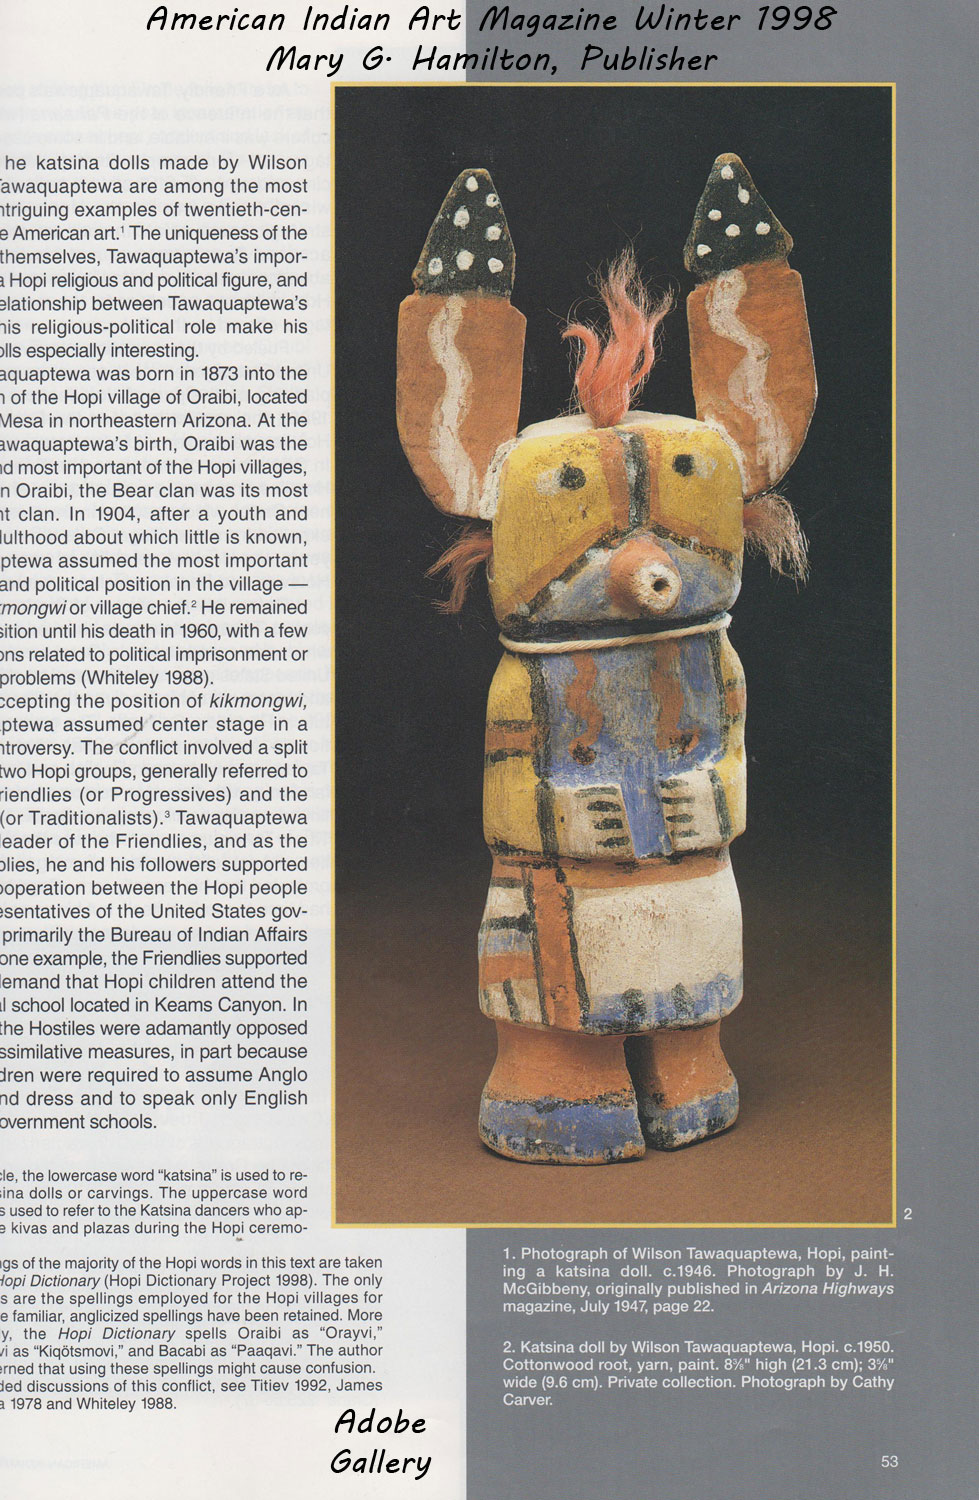 AMERICAN INDIAN ART Magazine C4406Z - Adobe Gallery, Santa Fe